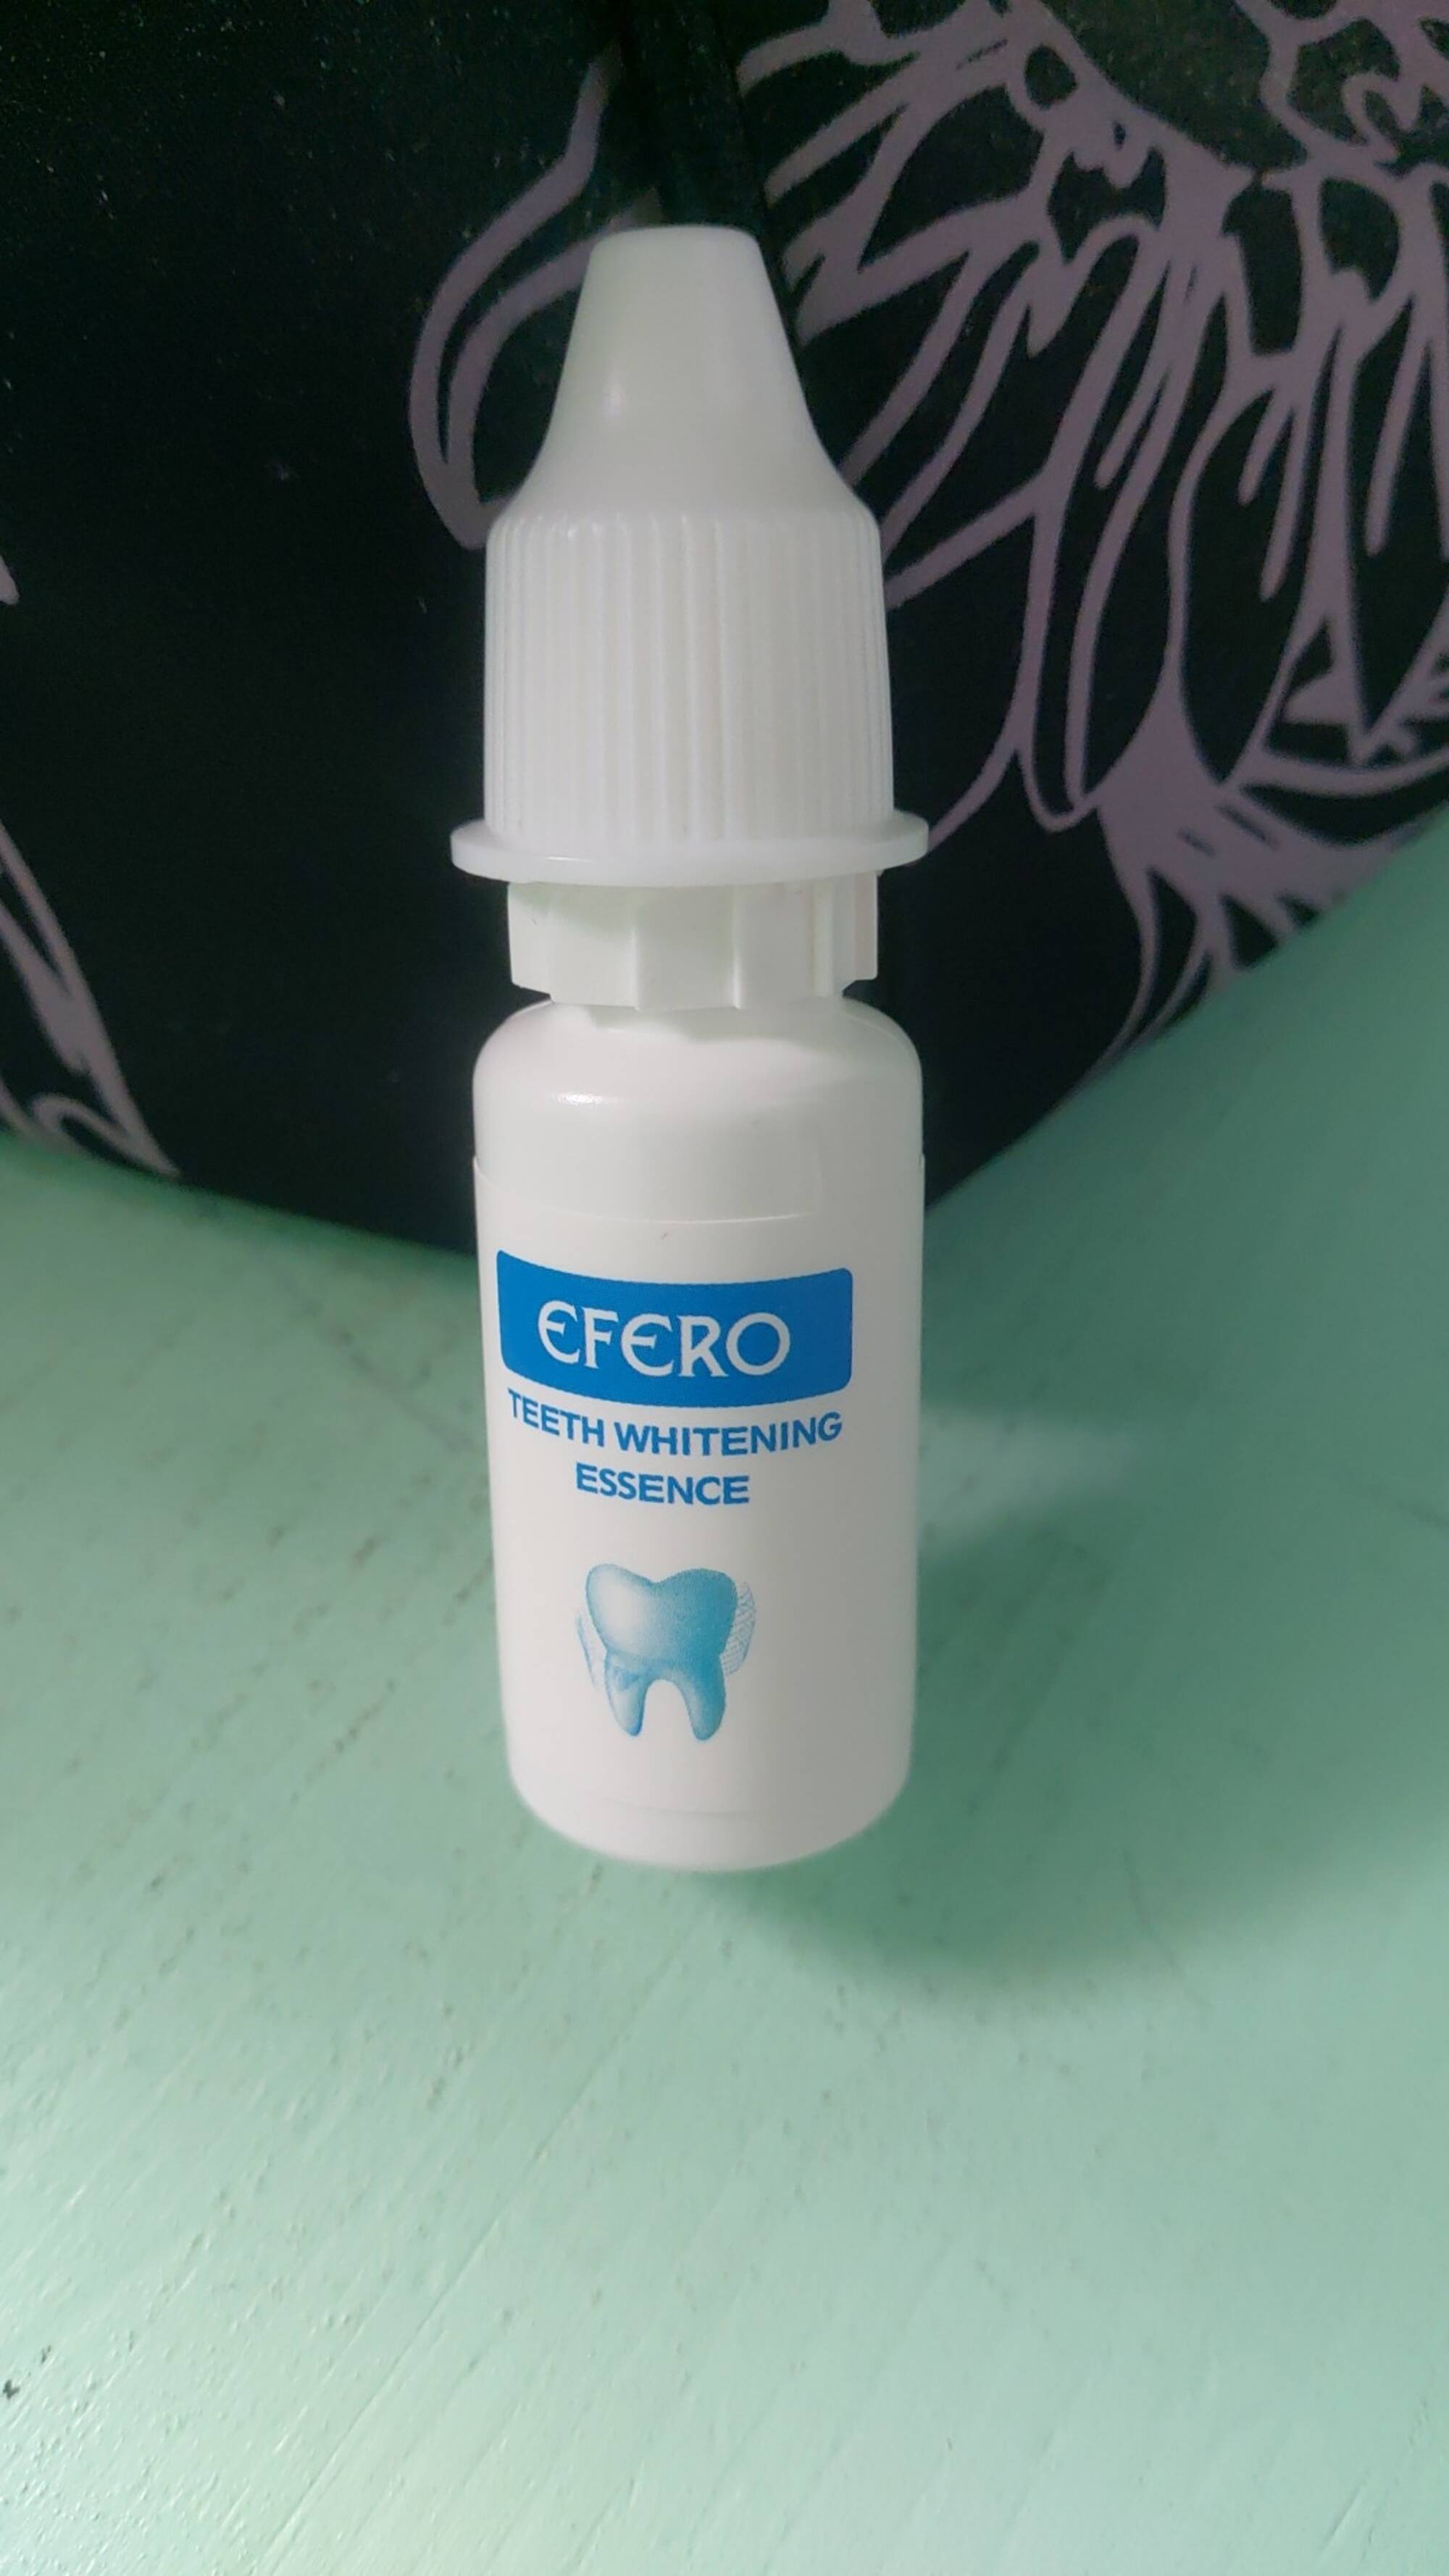 EFERO - Teeth whitening essence